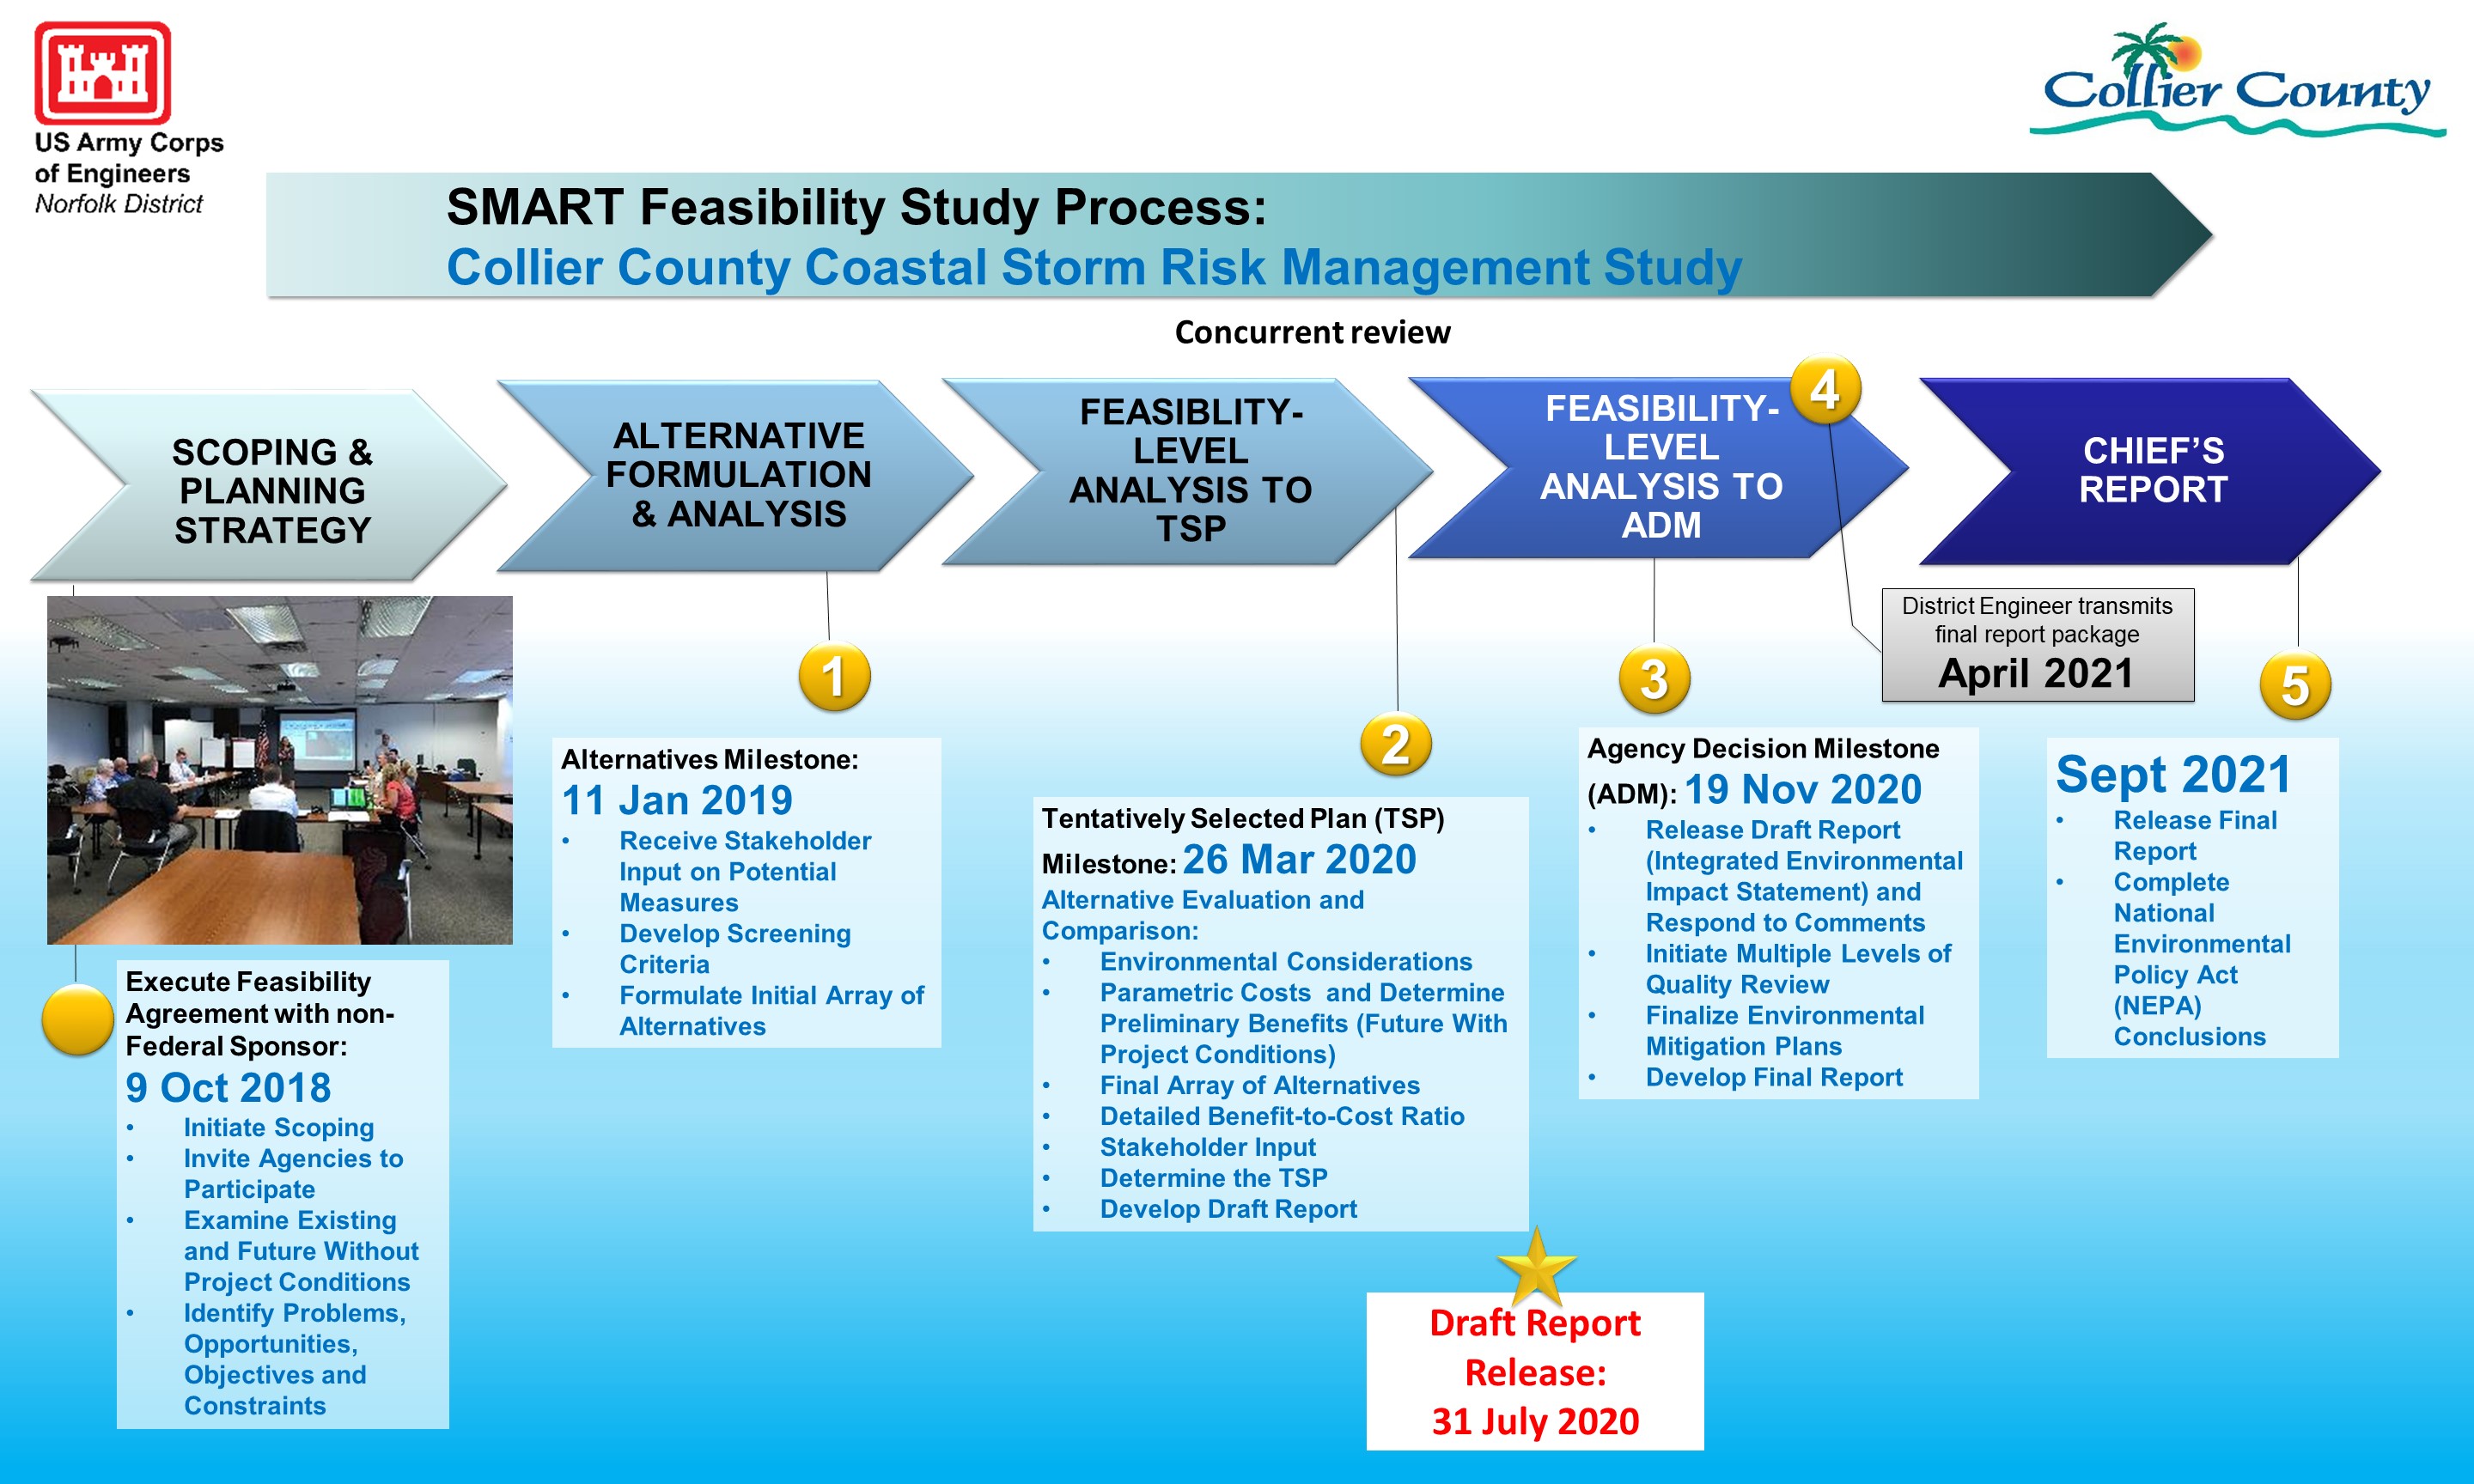 Collier County CSRM Study Process